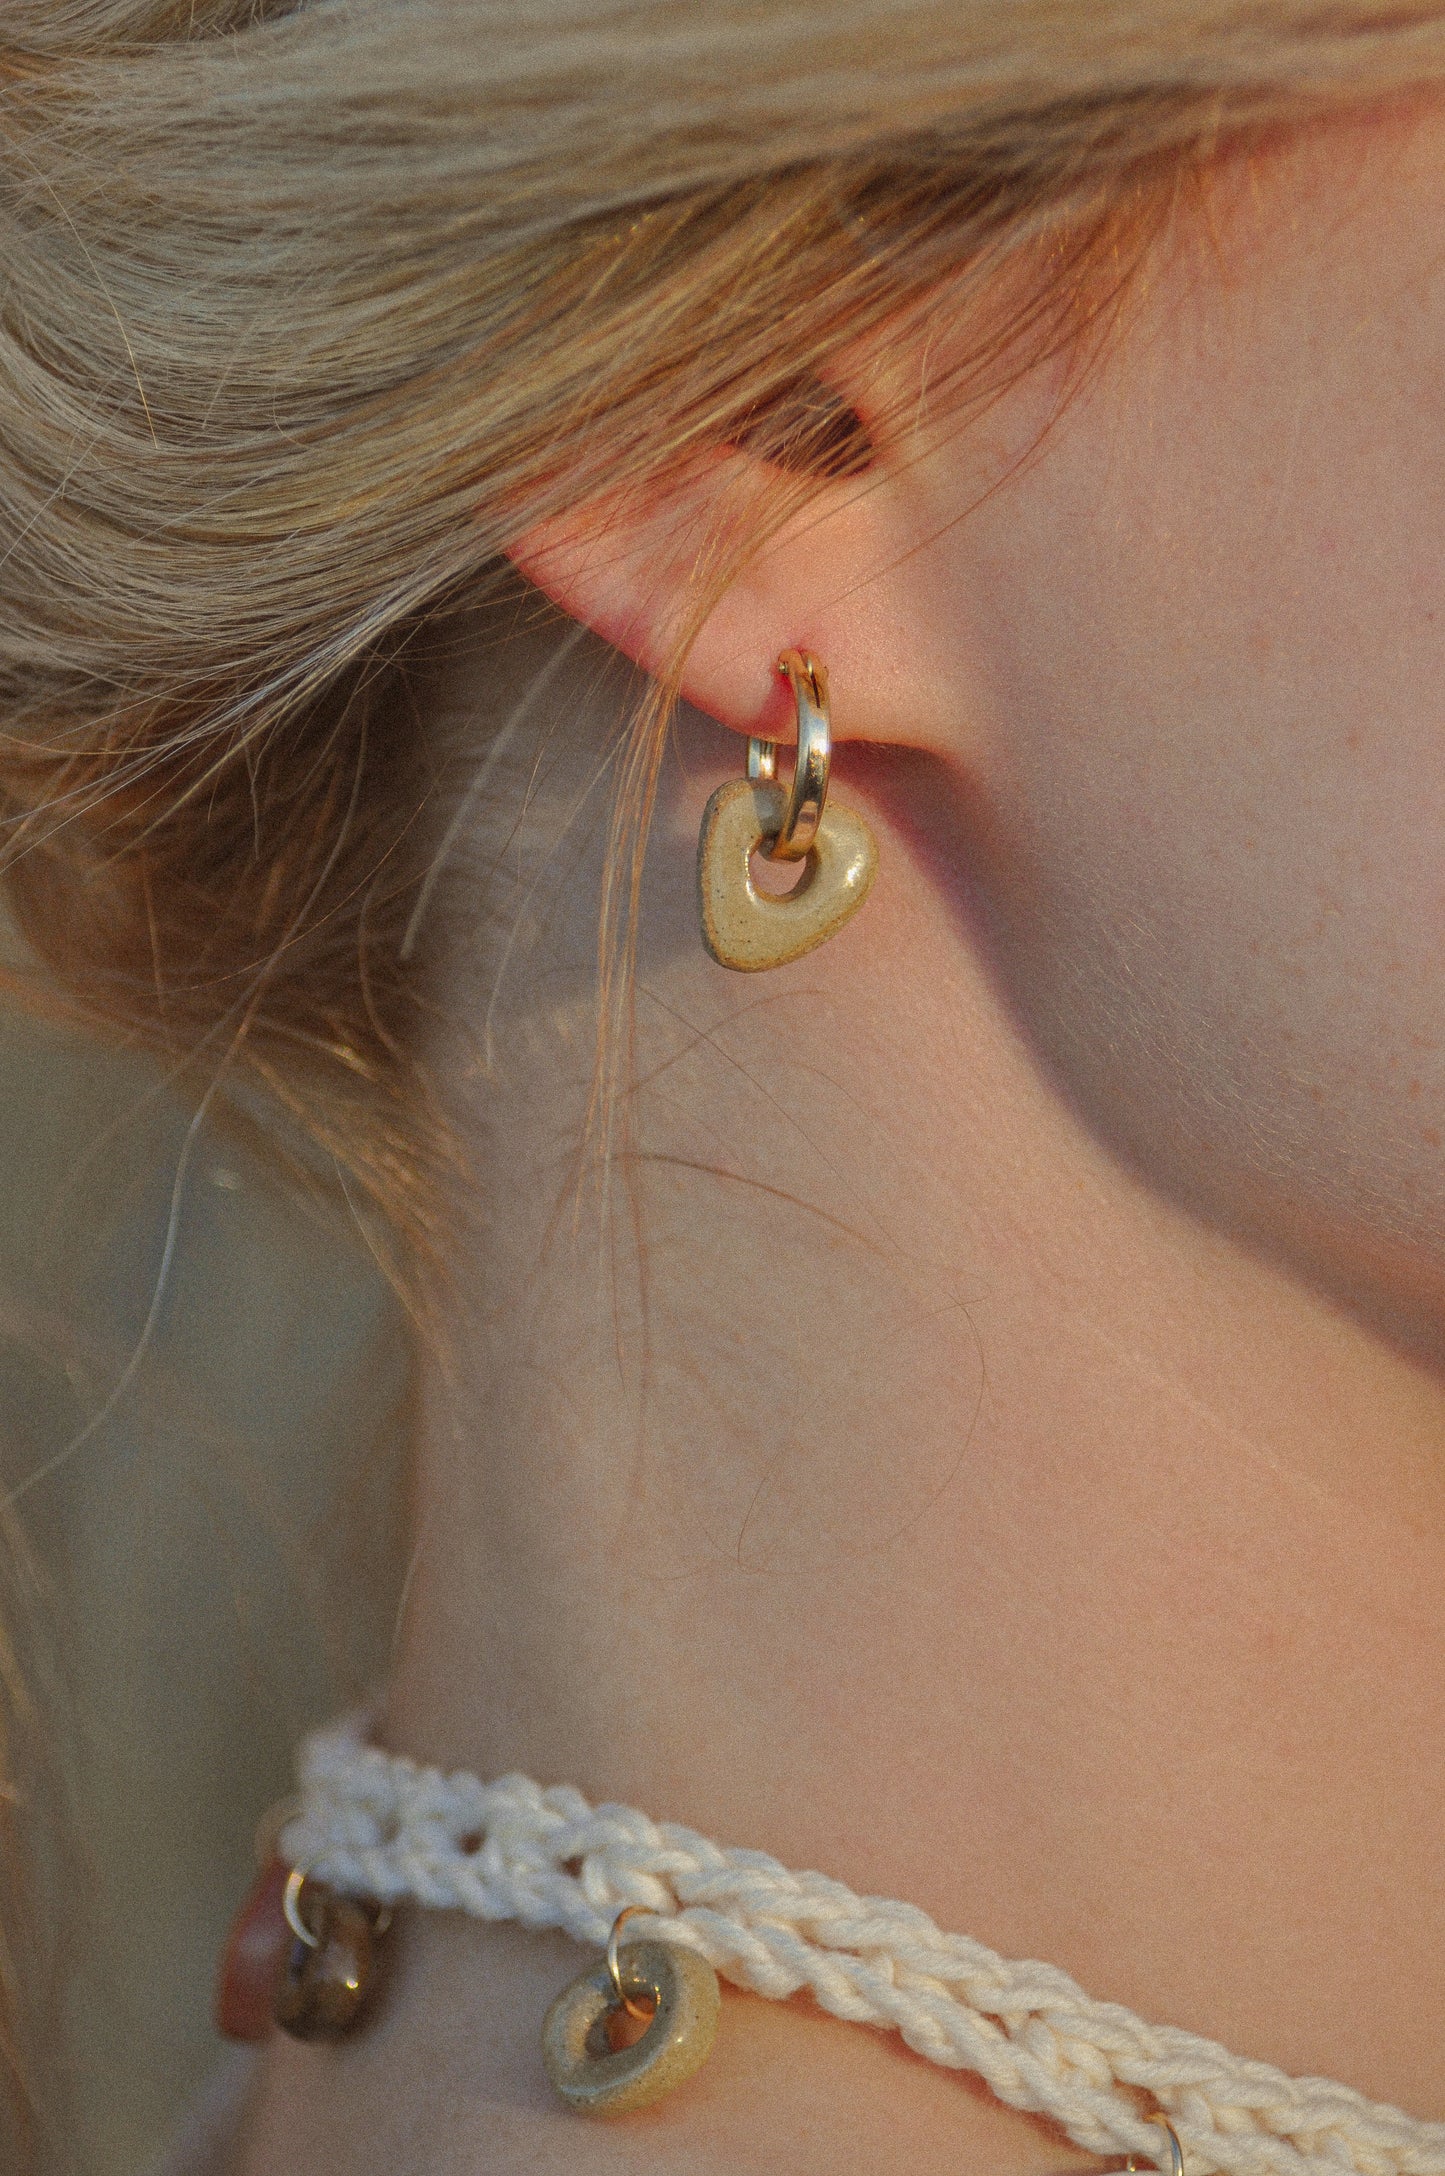 Peladilla mini Sable - Boucles d'oreilles